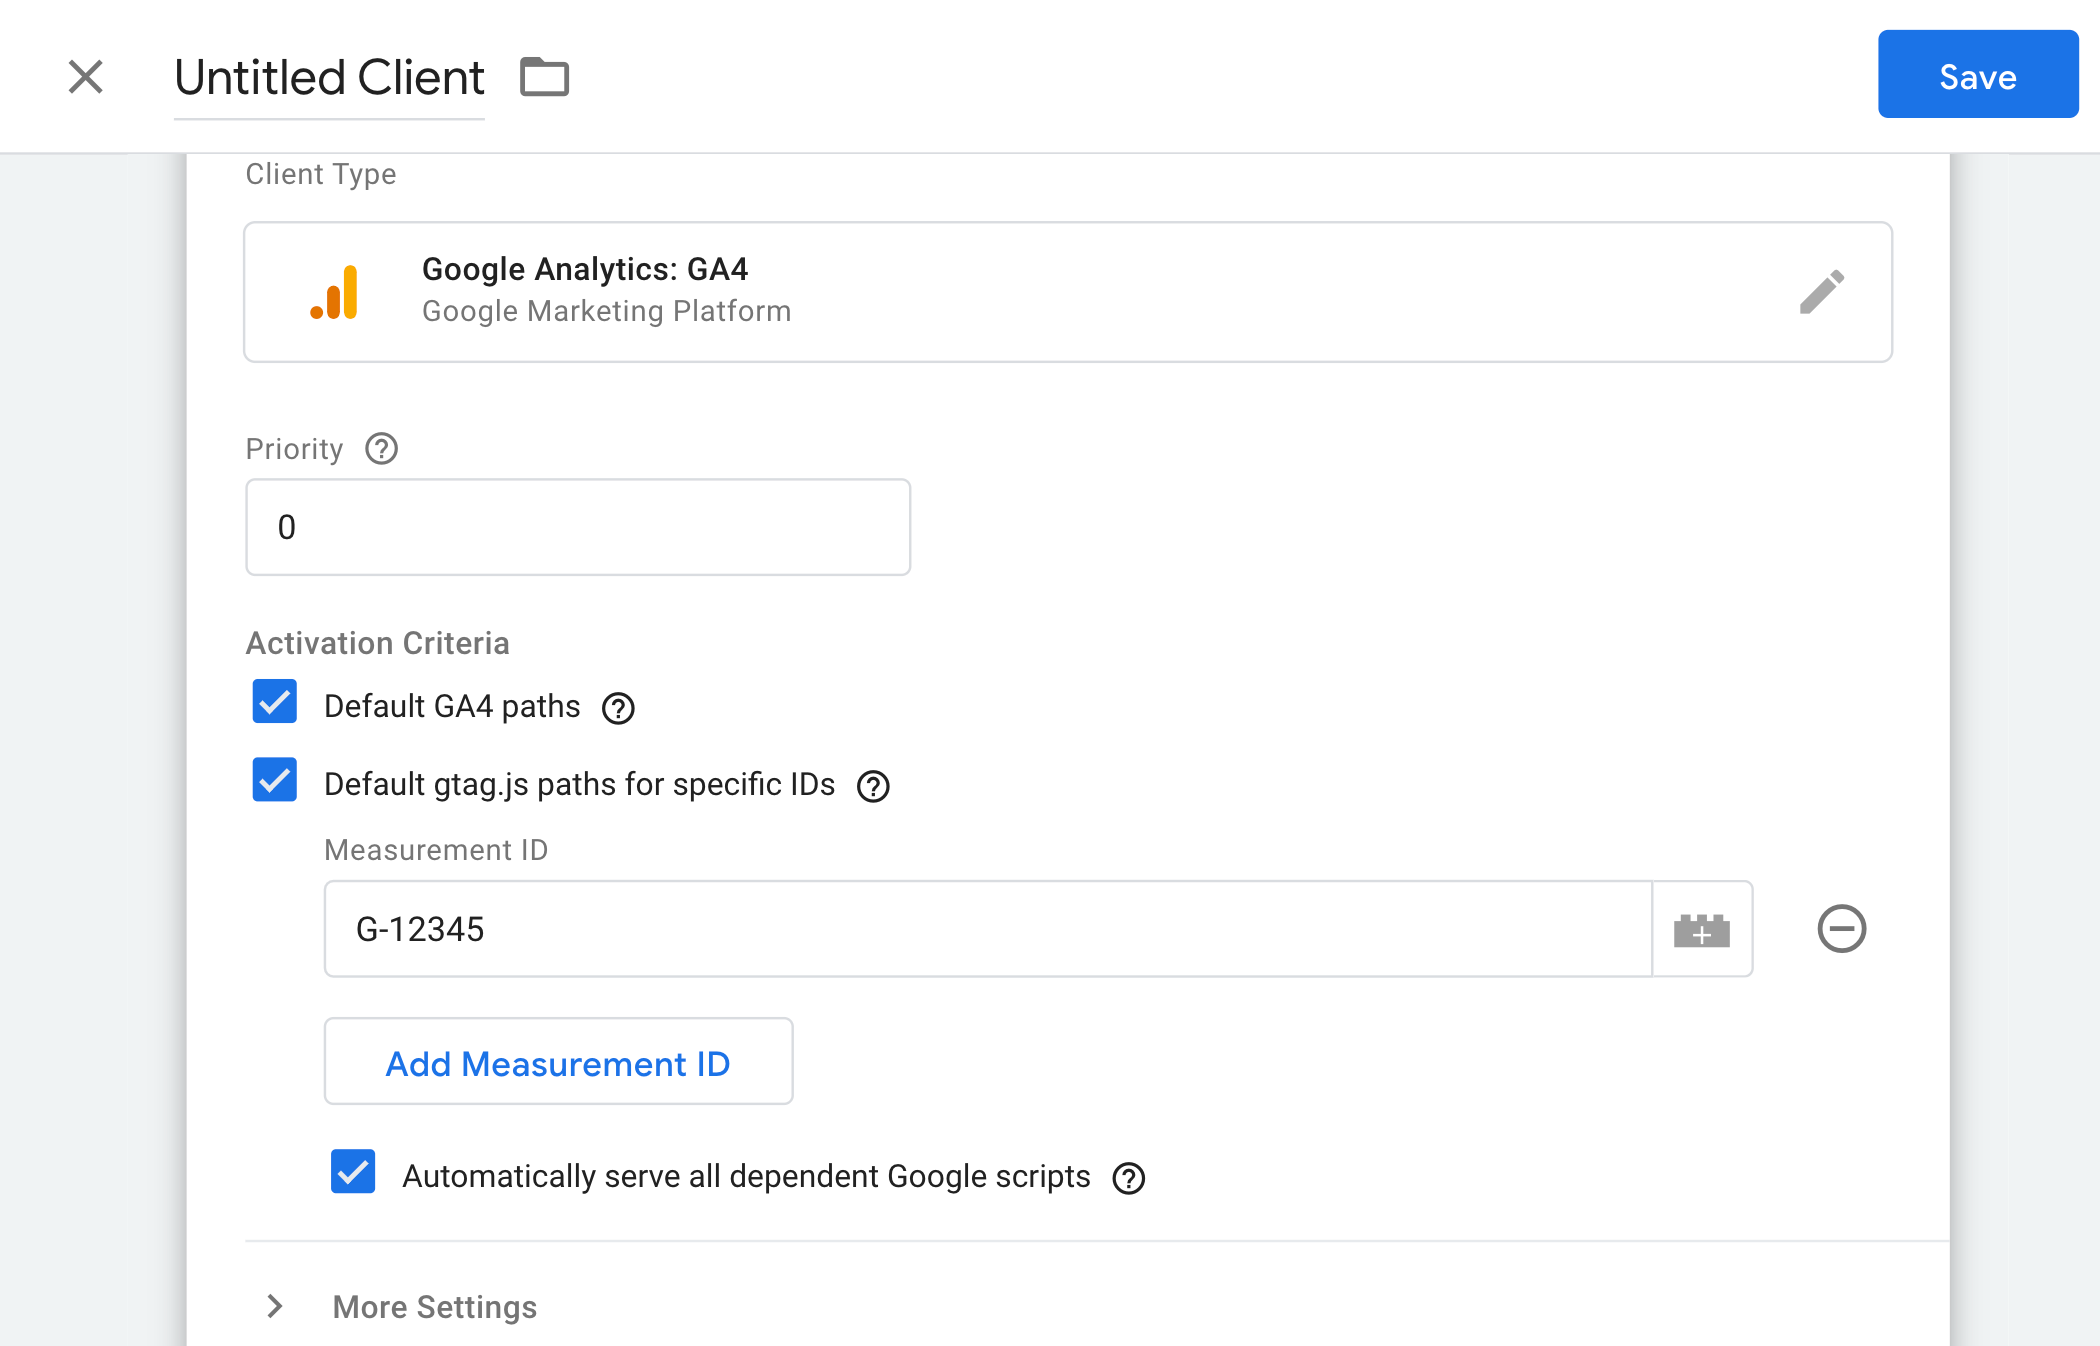 Configuration of Google Analytics: GA4 client